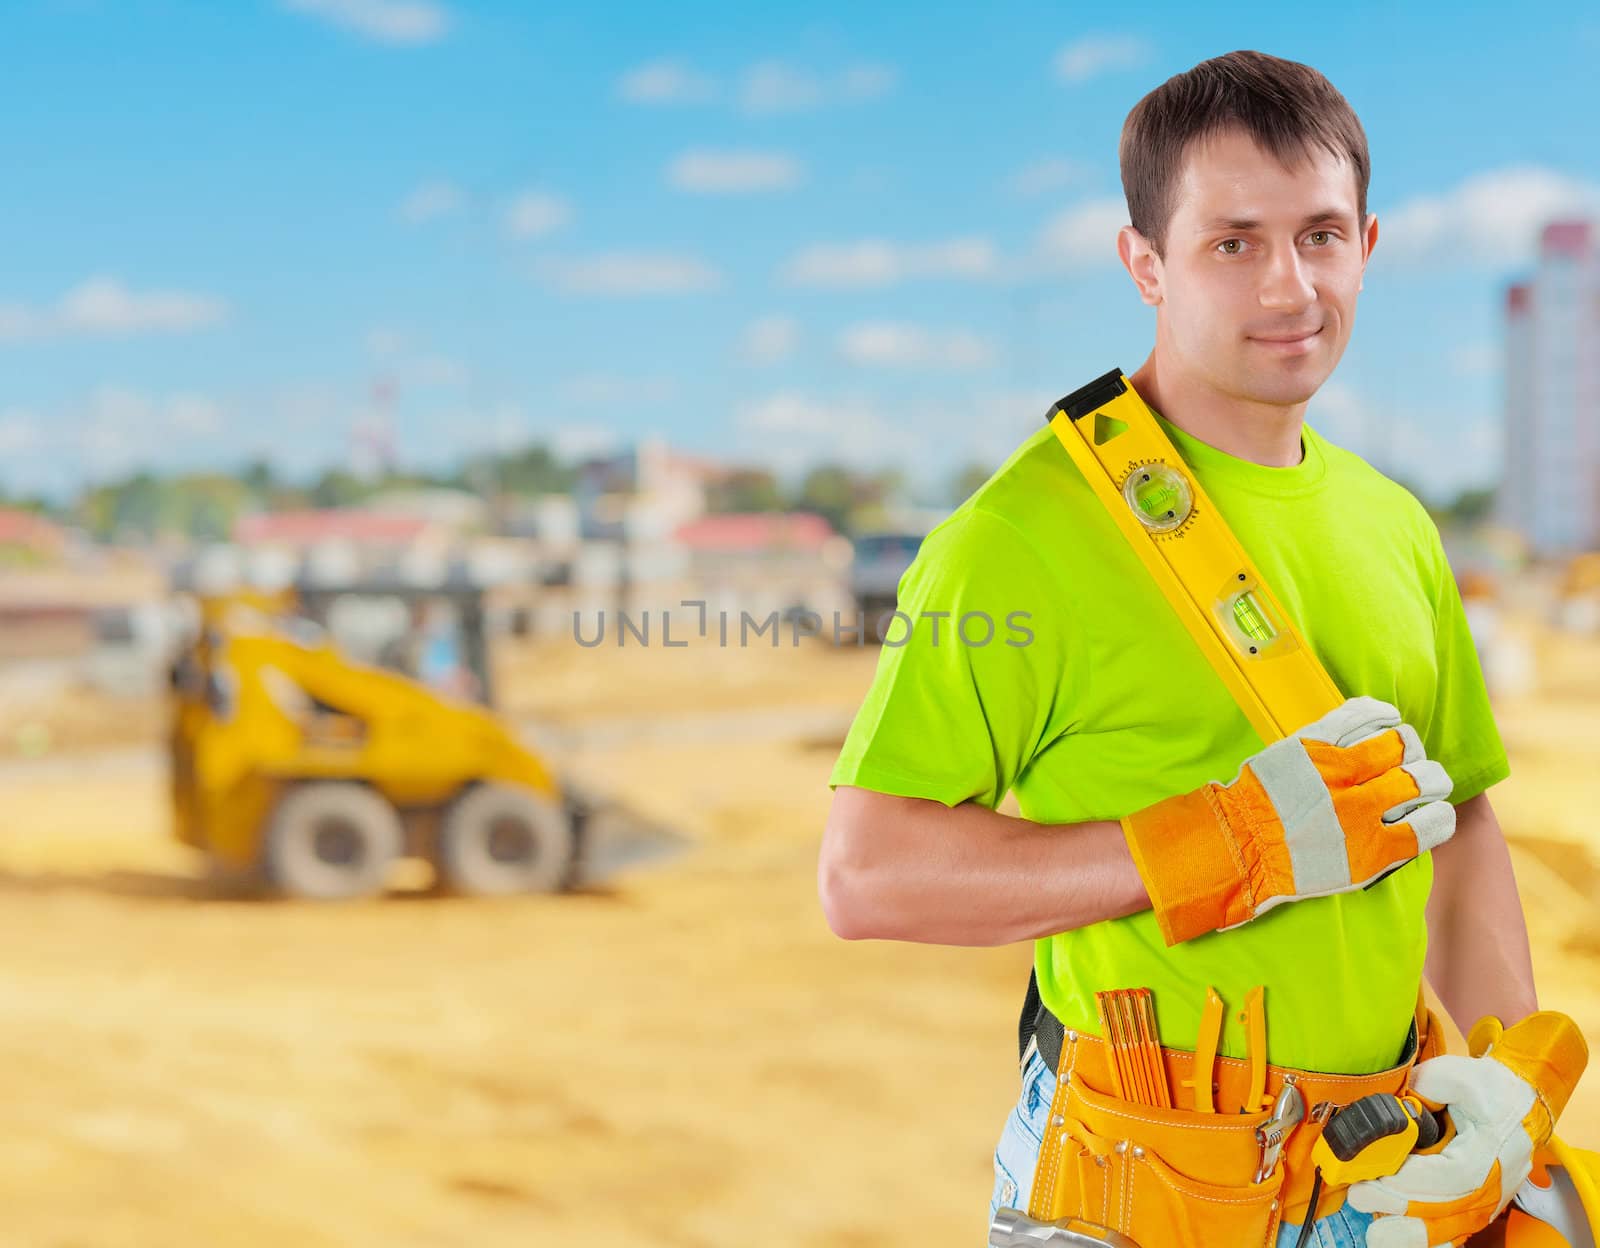 worker holding construction lewel